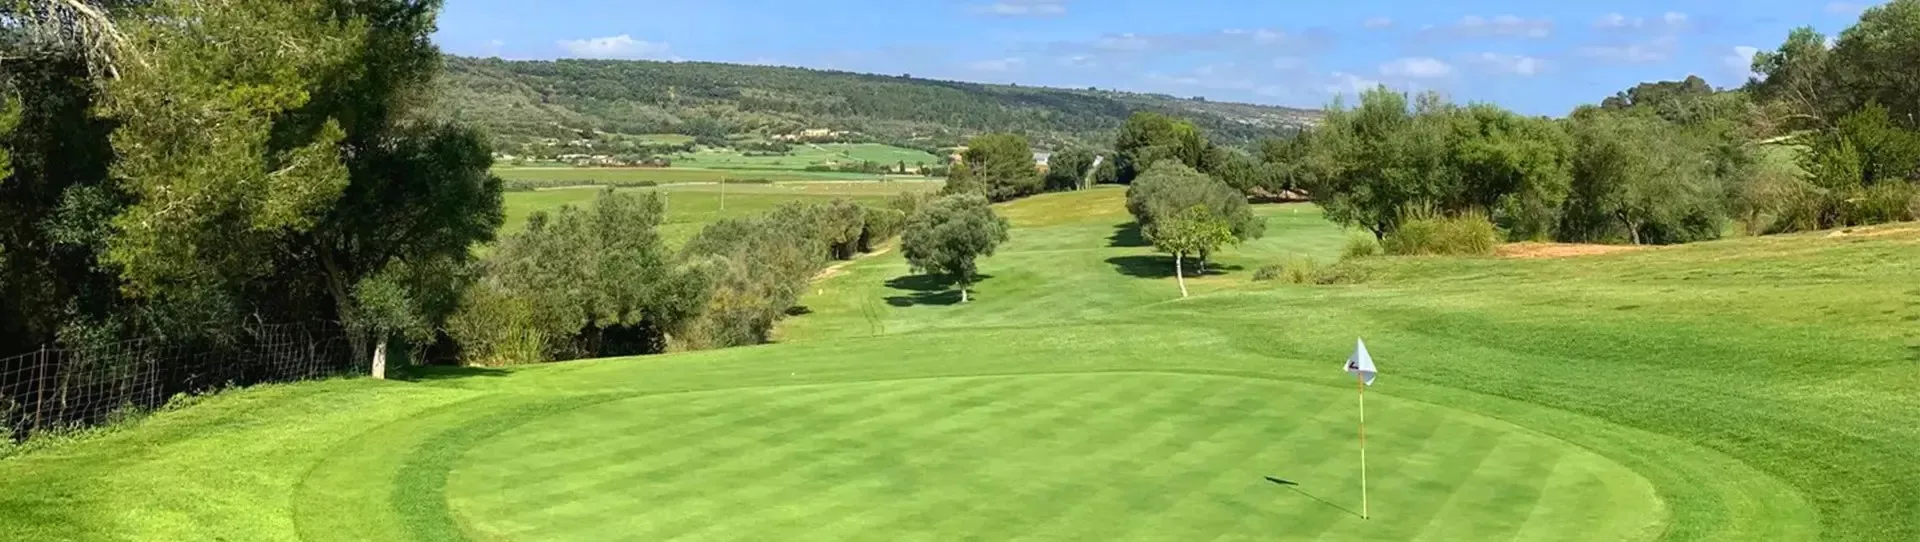 Spain golf courses - La Reserva Rotana Golf Course - Photo 2